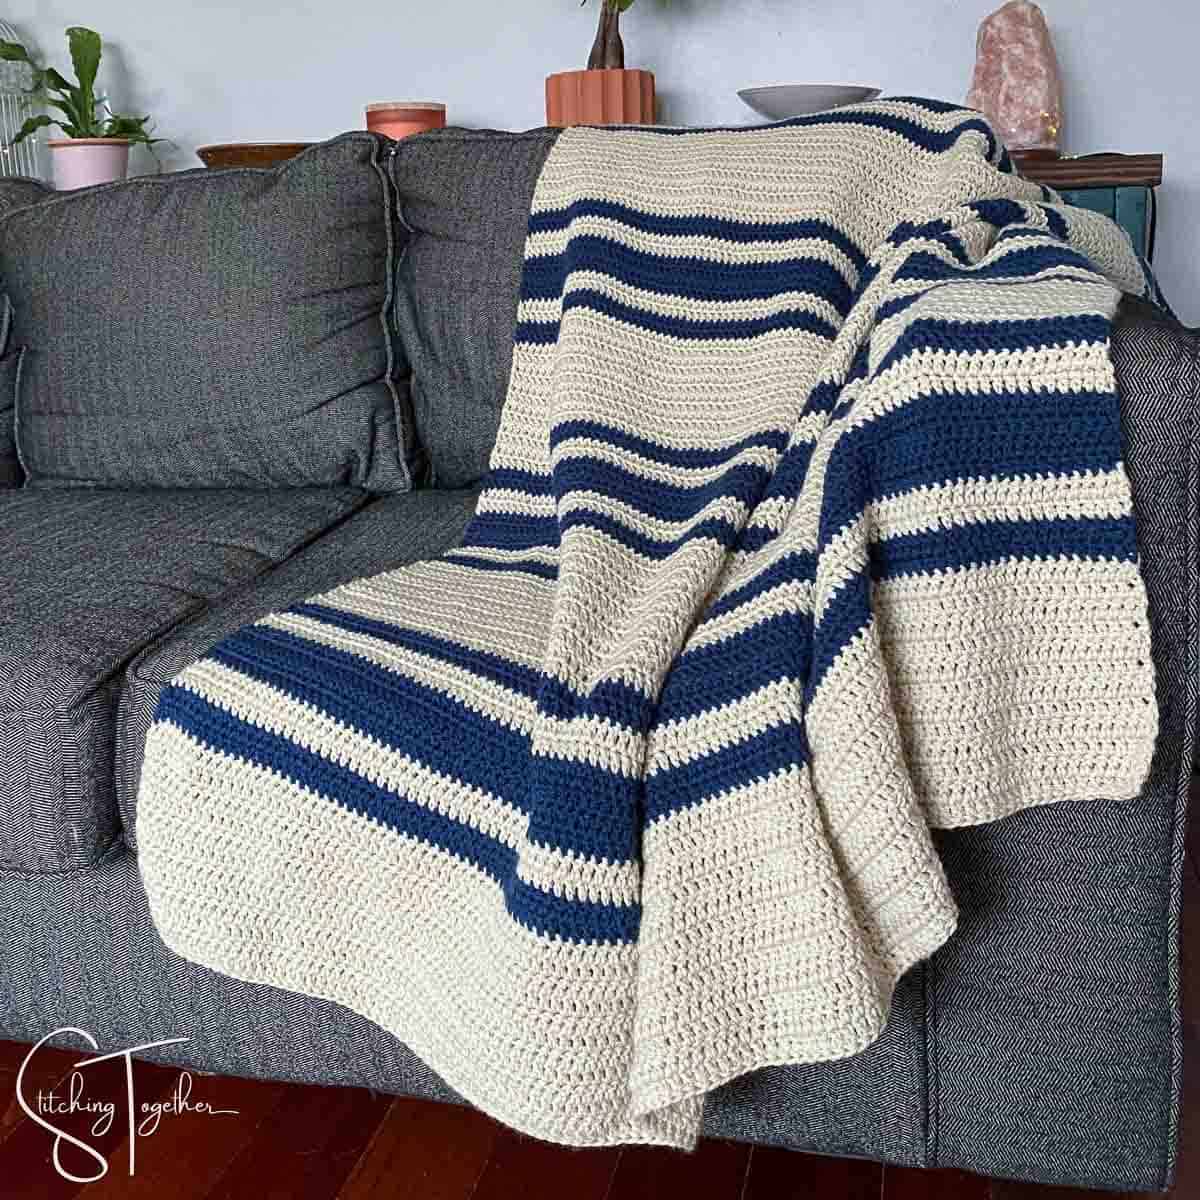 2 color crochet blanket: 23 free patterns